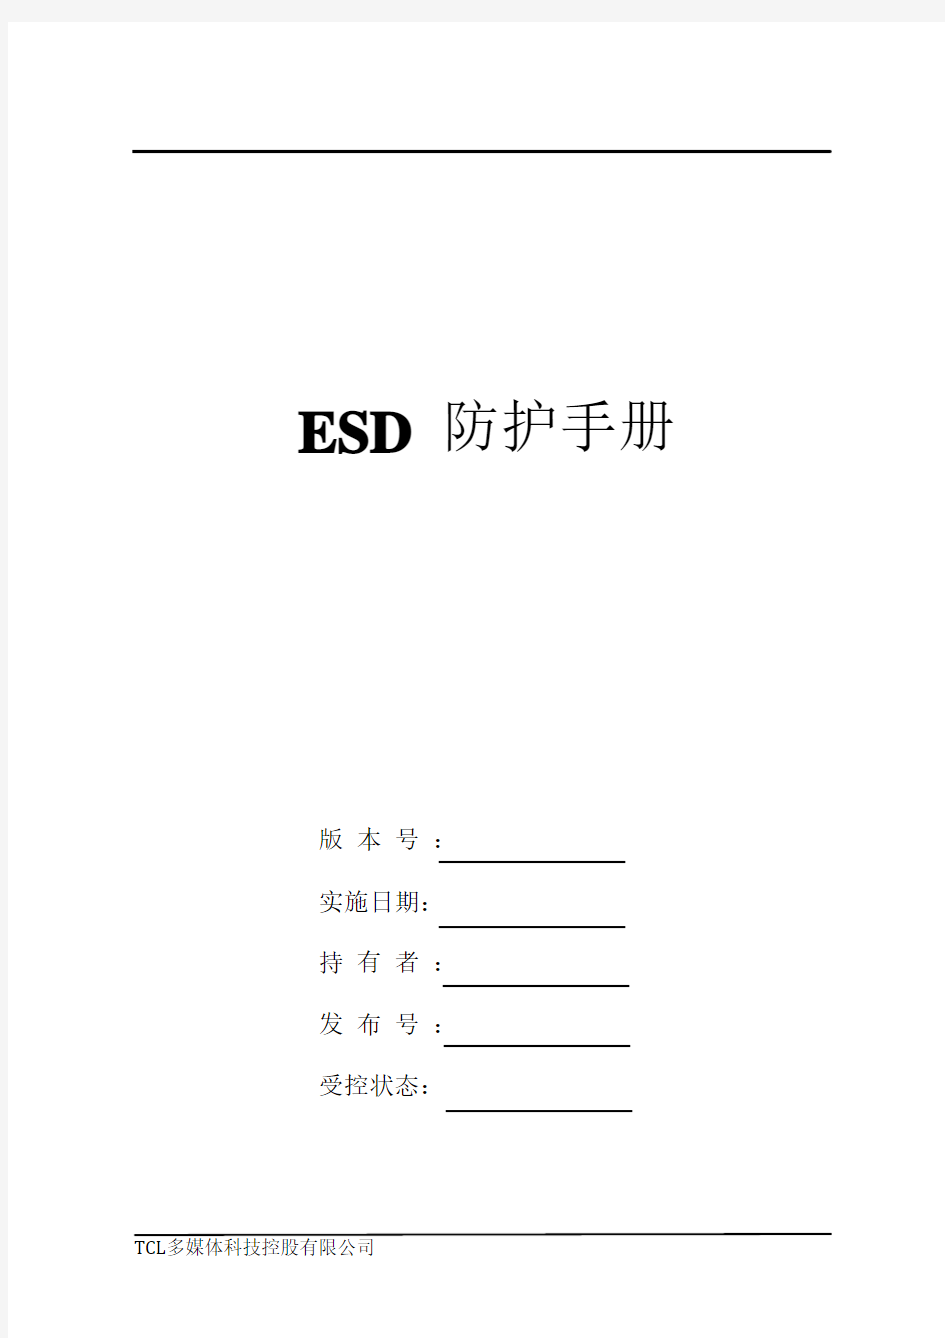 ESD 防护手册Rev 1.0